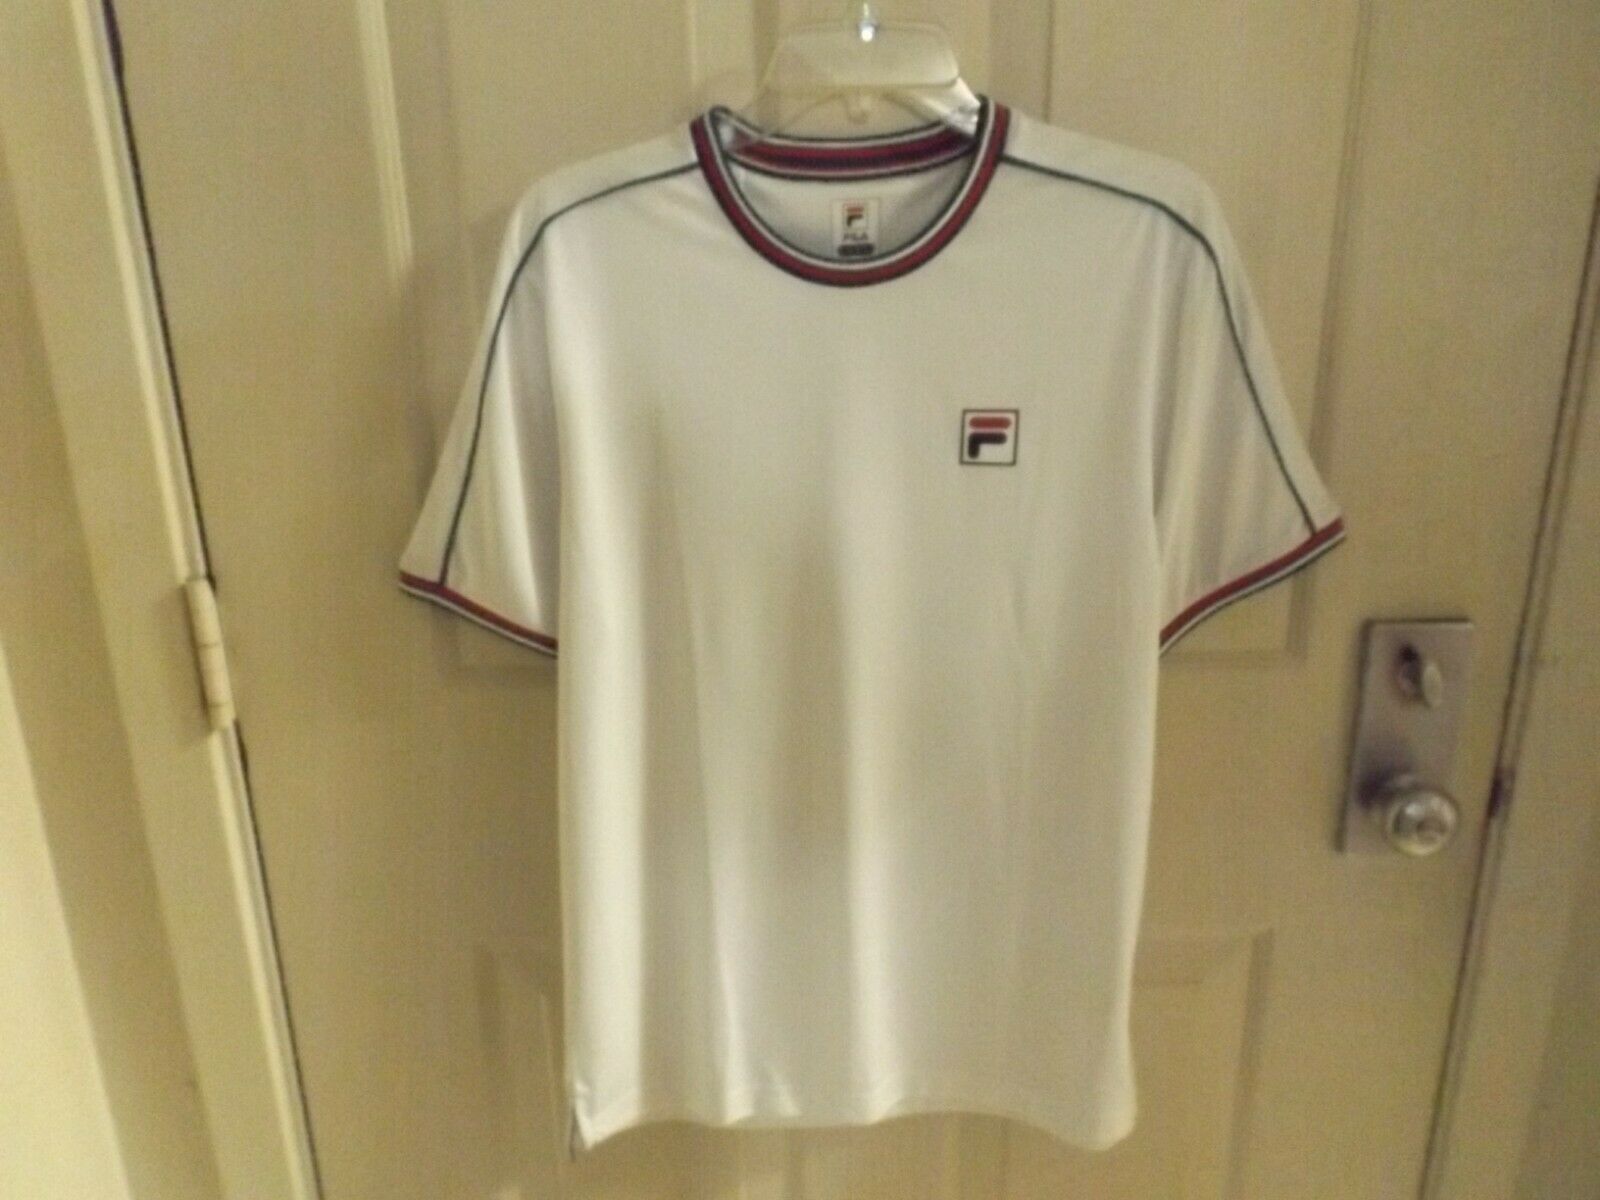 Fila Legend Men's Size Small Tennis Shirt White Crew Tmo15365 New W/tags